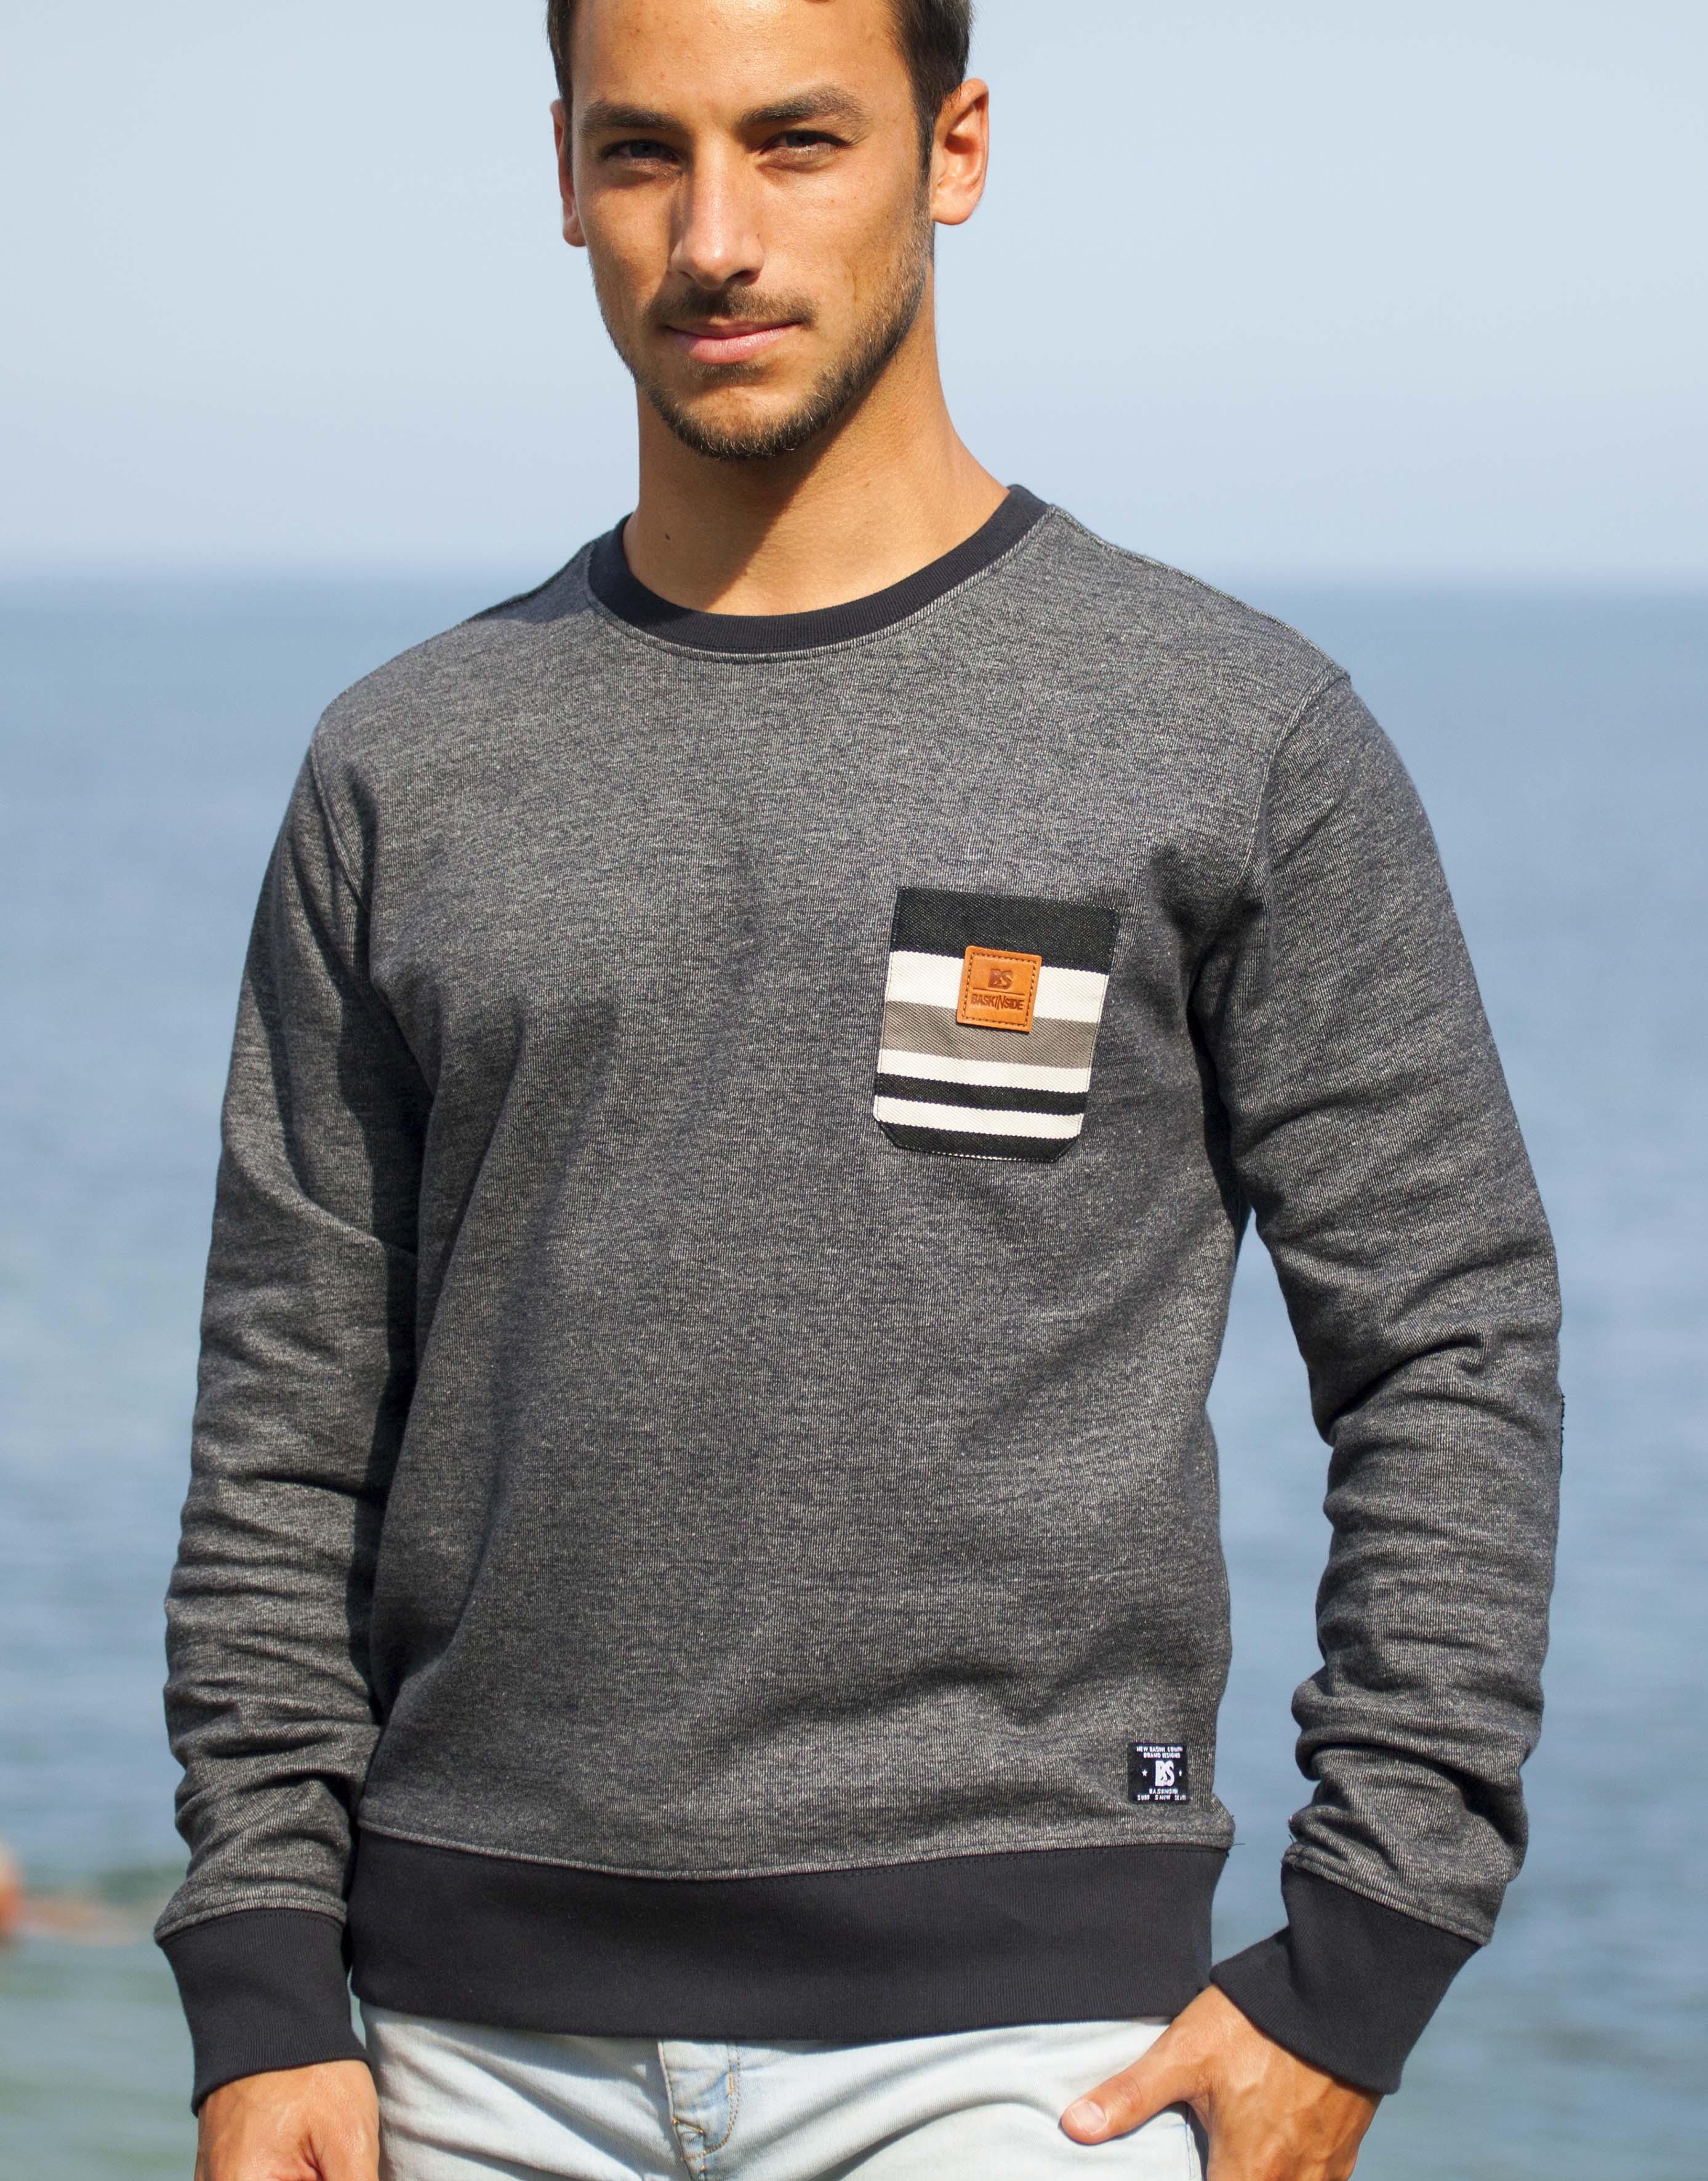 mode eco responsable sweatshirt coton bio baskinside marque basque au pays basque